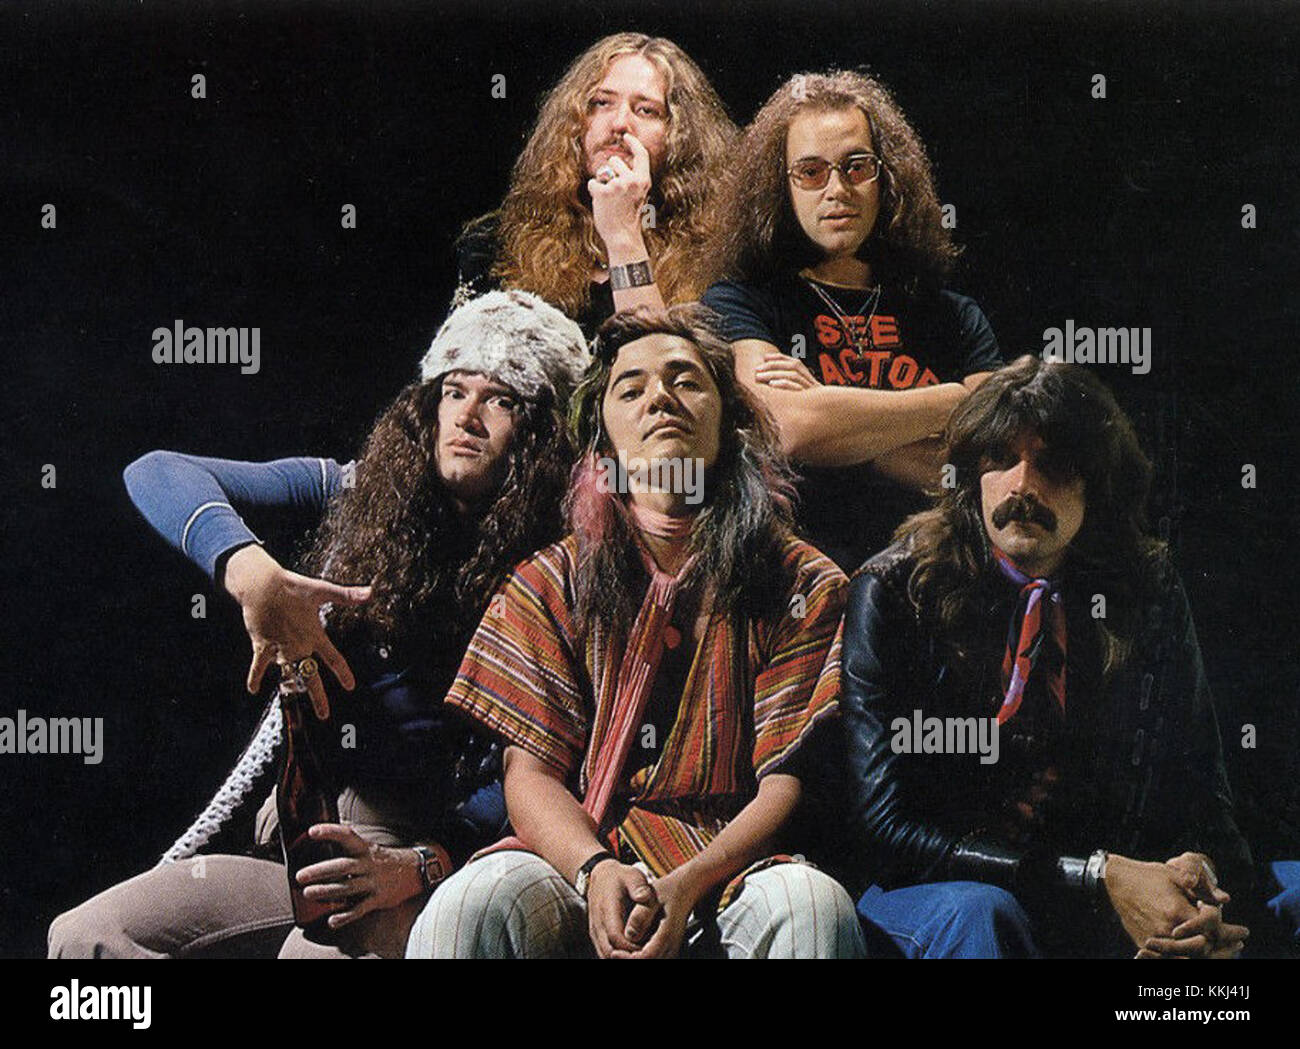 Deep Purple (UK Tour 1976) Stockfoto